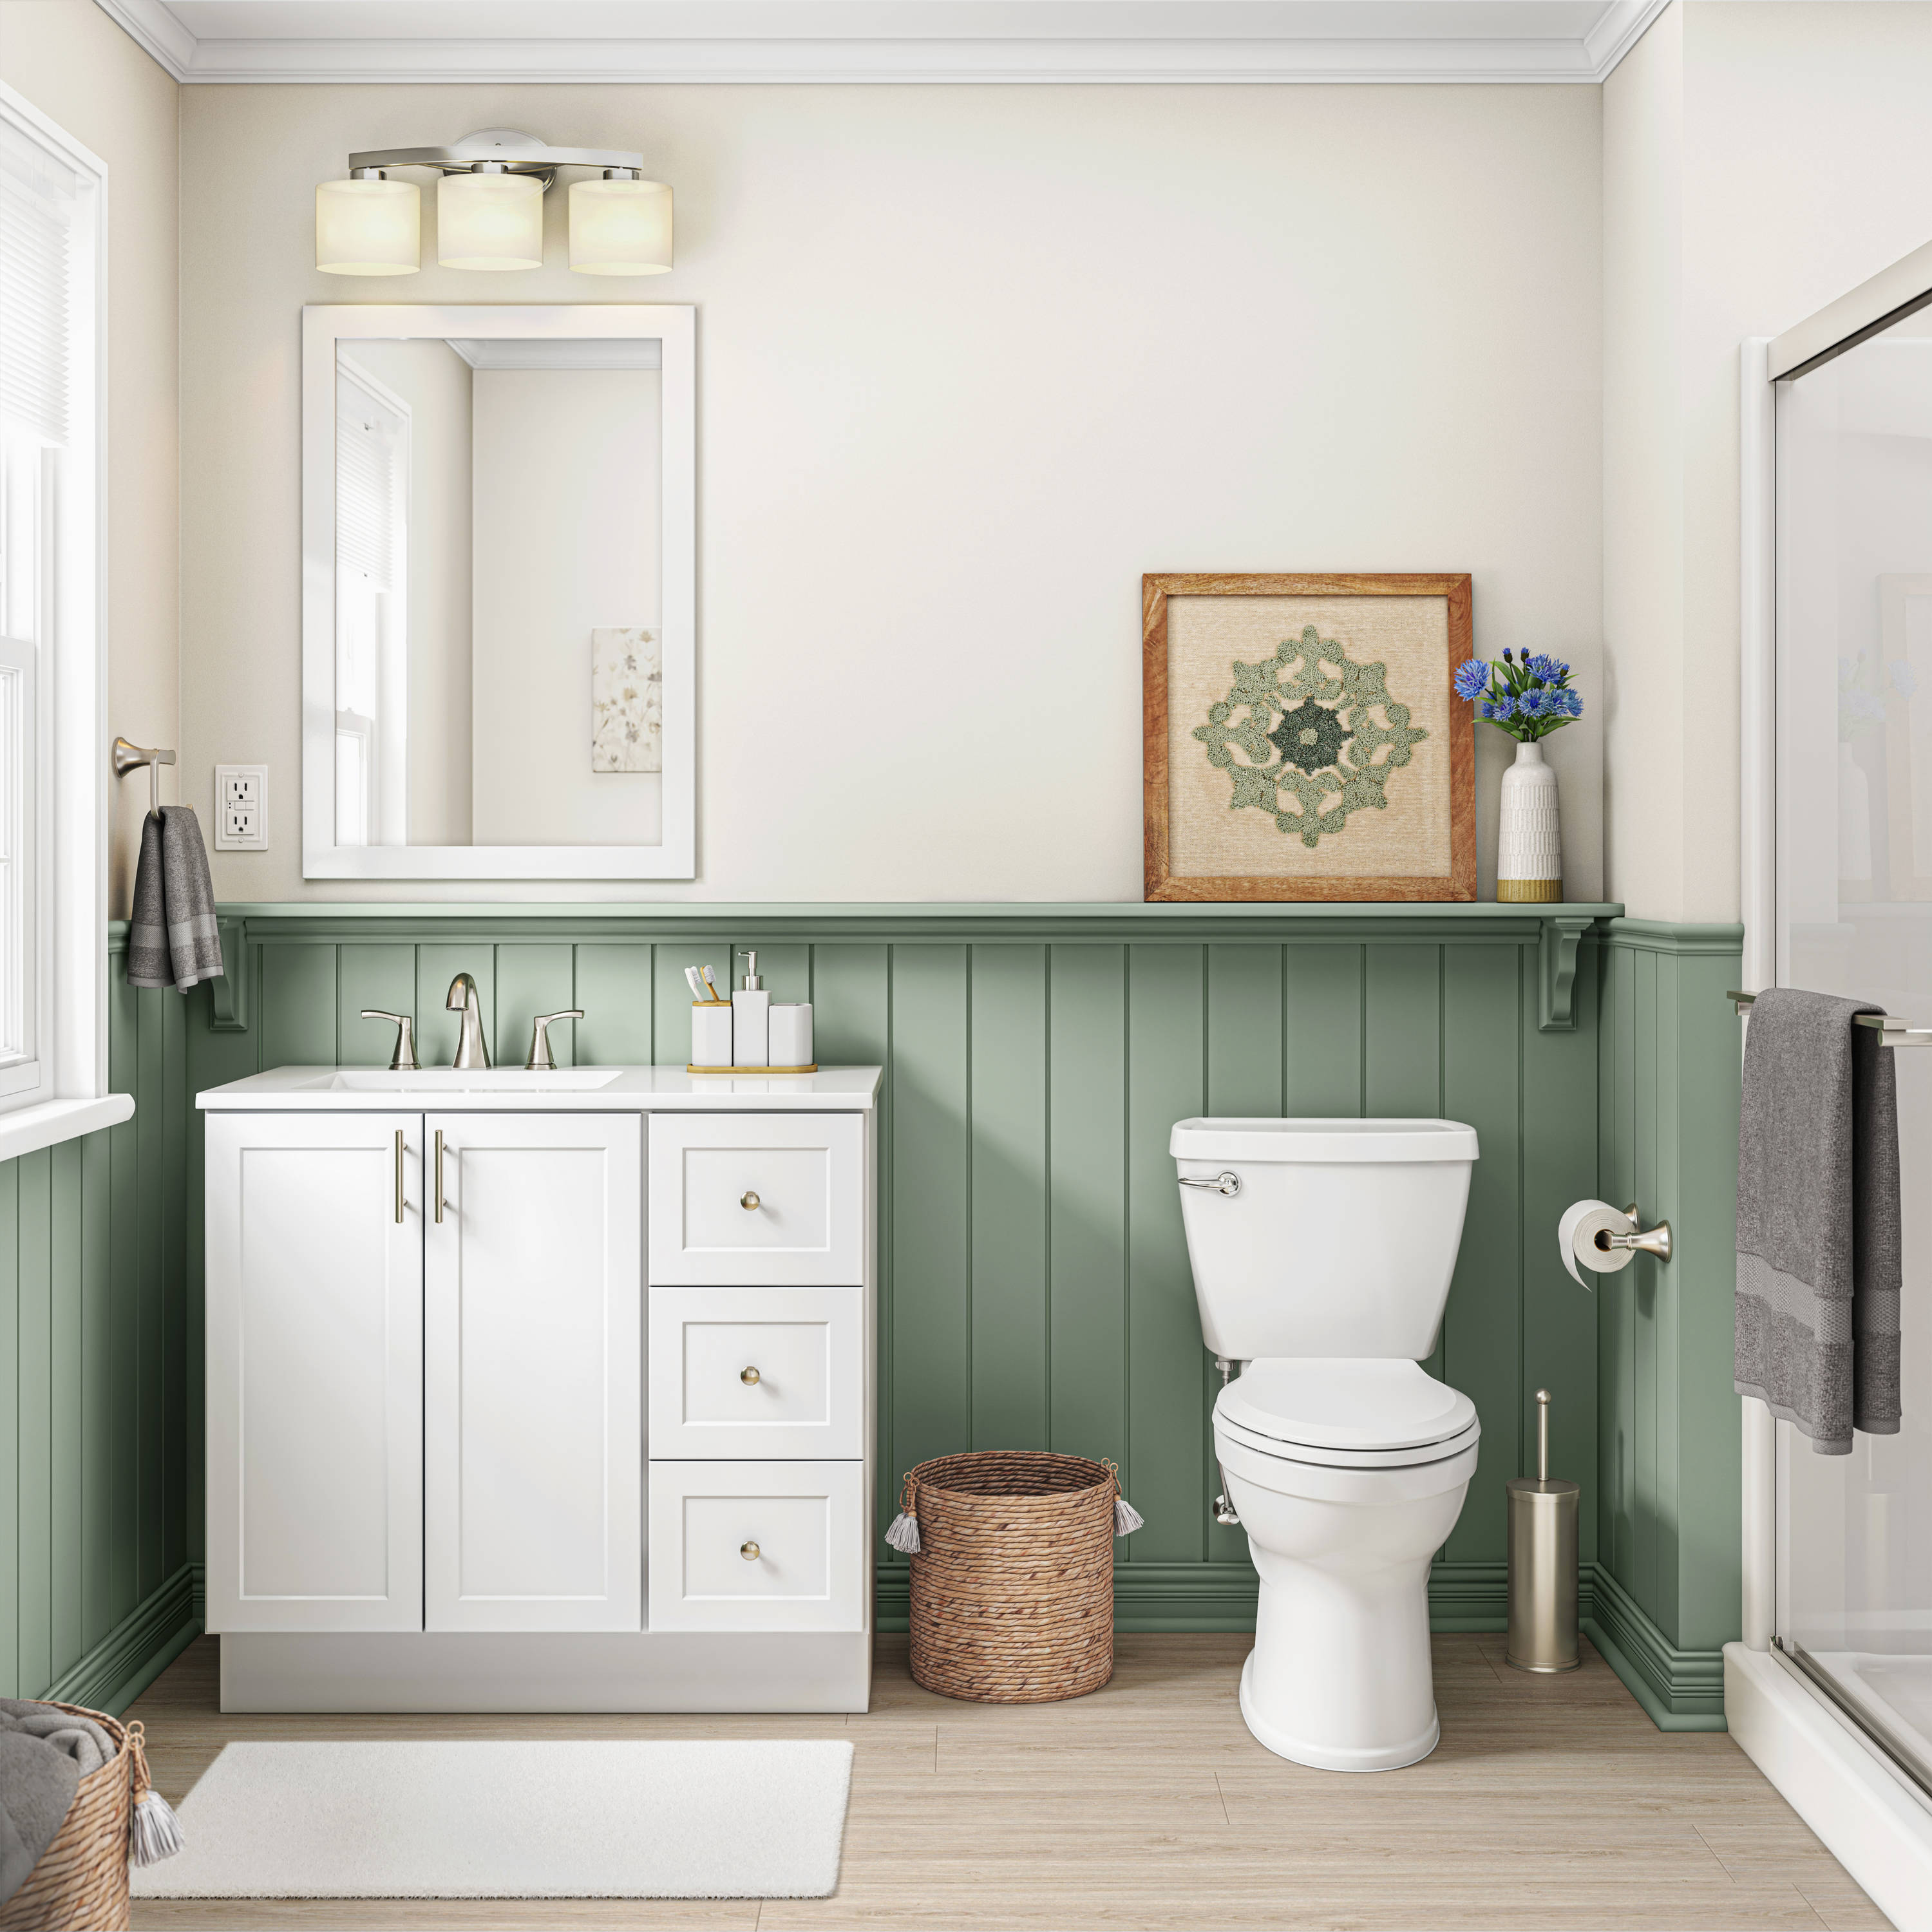 Home Basics White Ceramic Bath Accessory Set in the Bathroom Accessories  department at